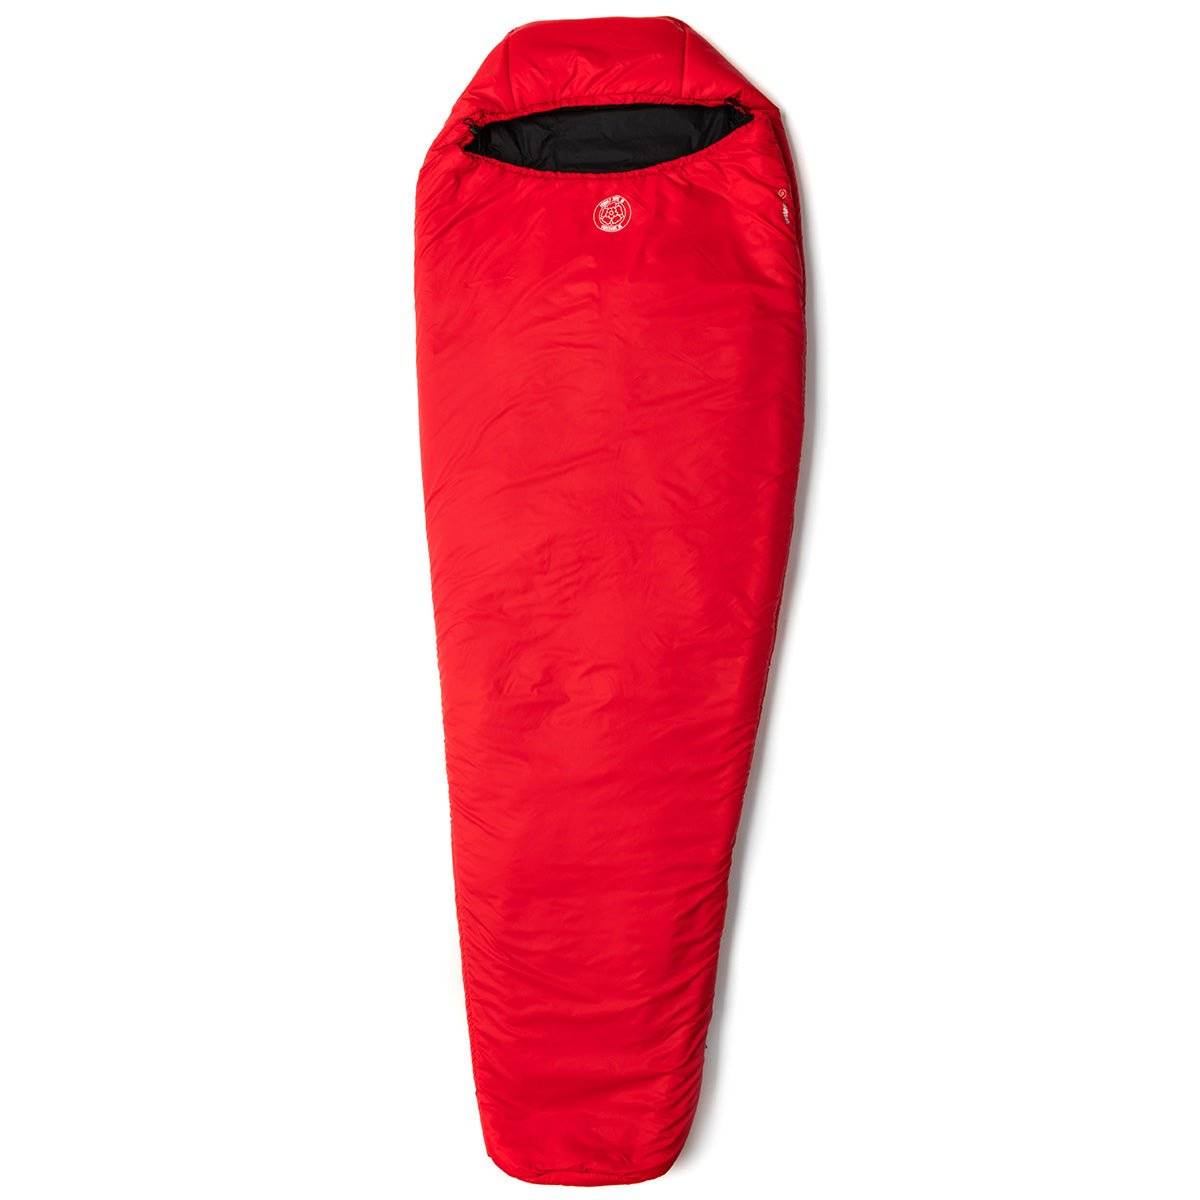 Snugpak Softie 6 Twilight Sleeping Bag Red and Black - John Bull Clothing